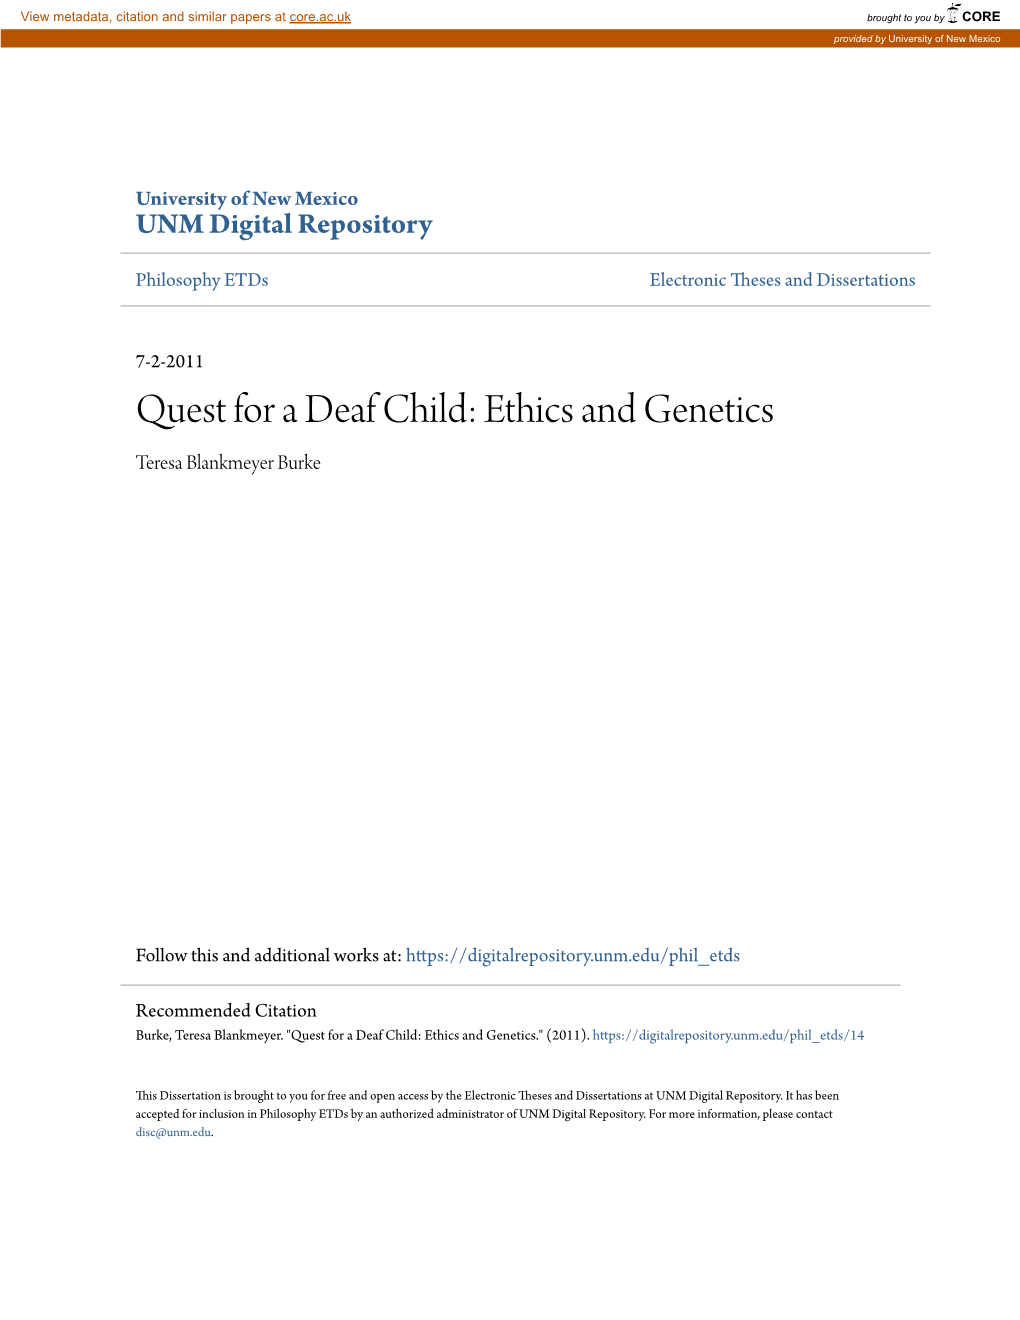 Quest for a Deaf Child: Ethics and Genetics Teresa Blankmeyer Burke